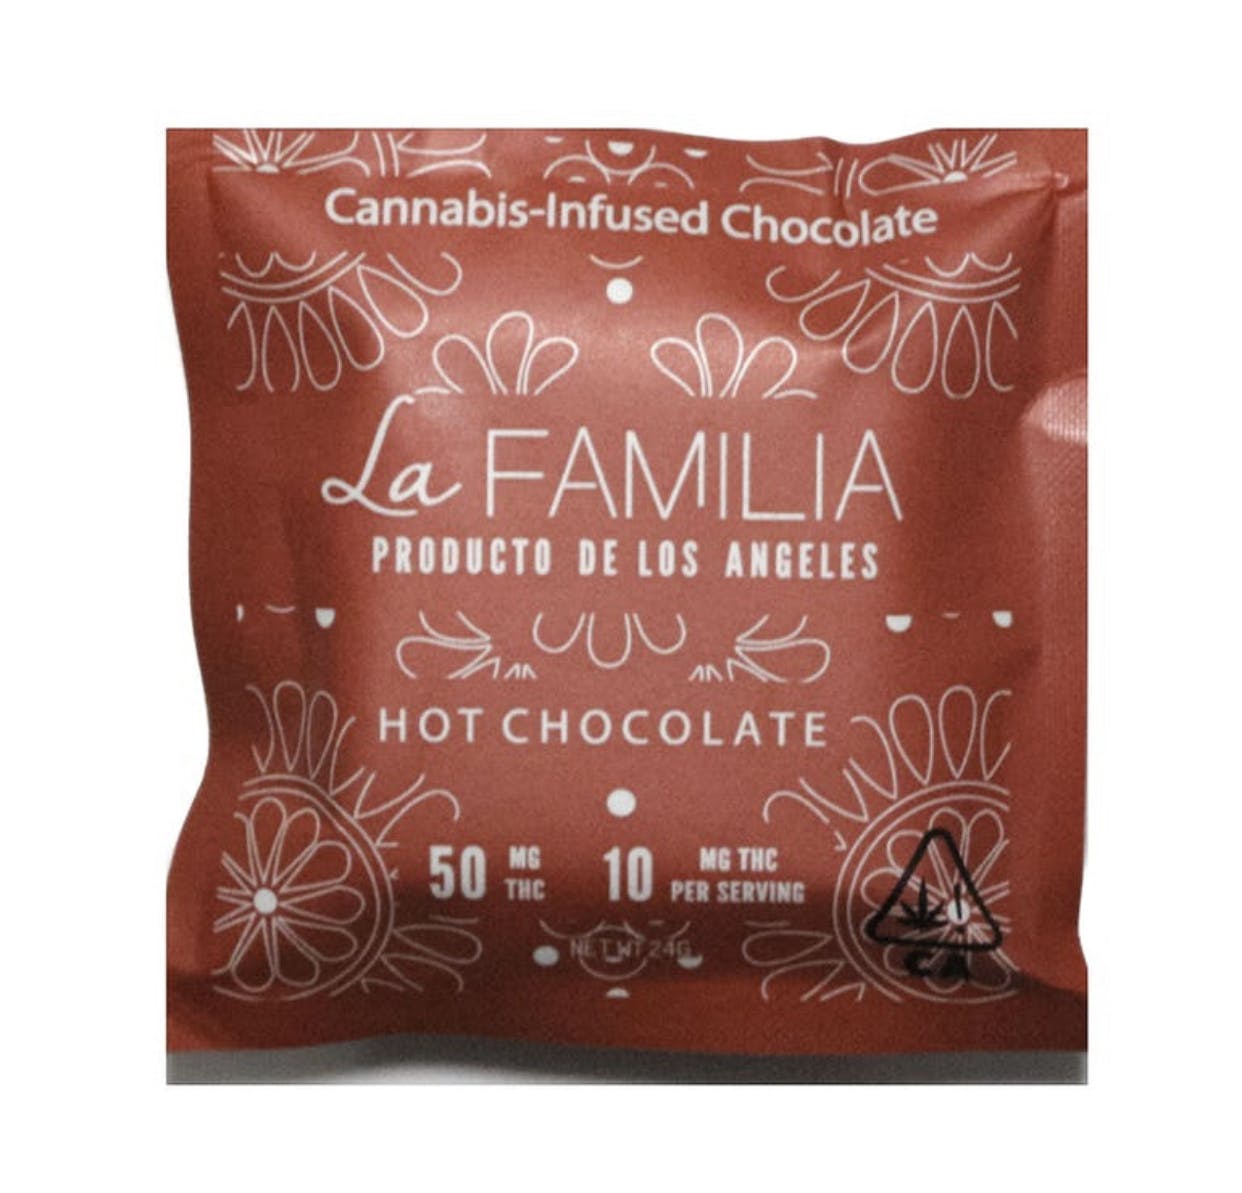 edible-la-familia-chocolate-2c-hot-chocolate